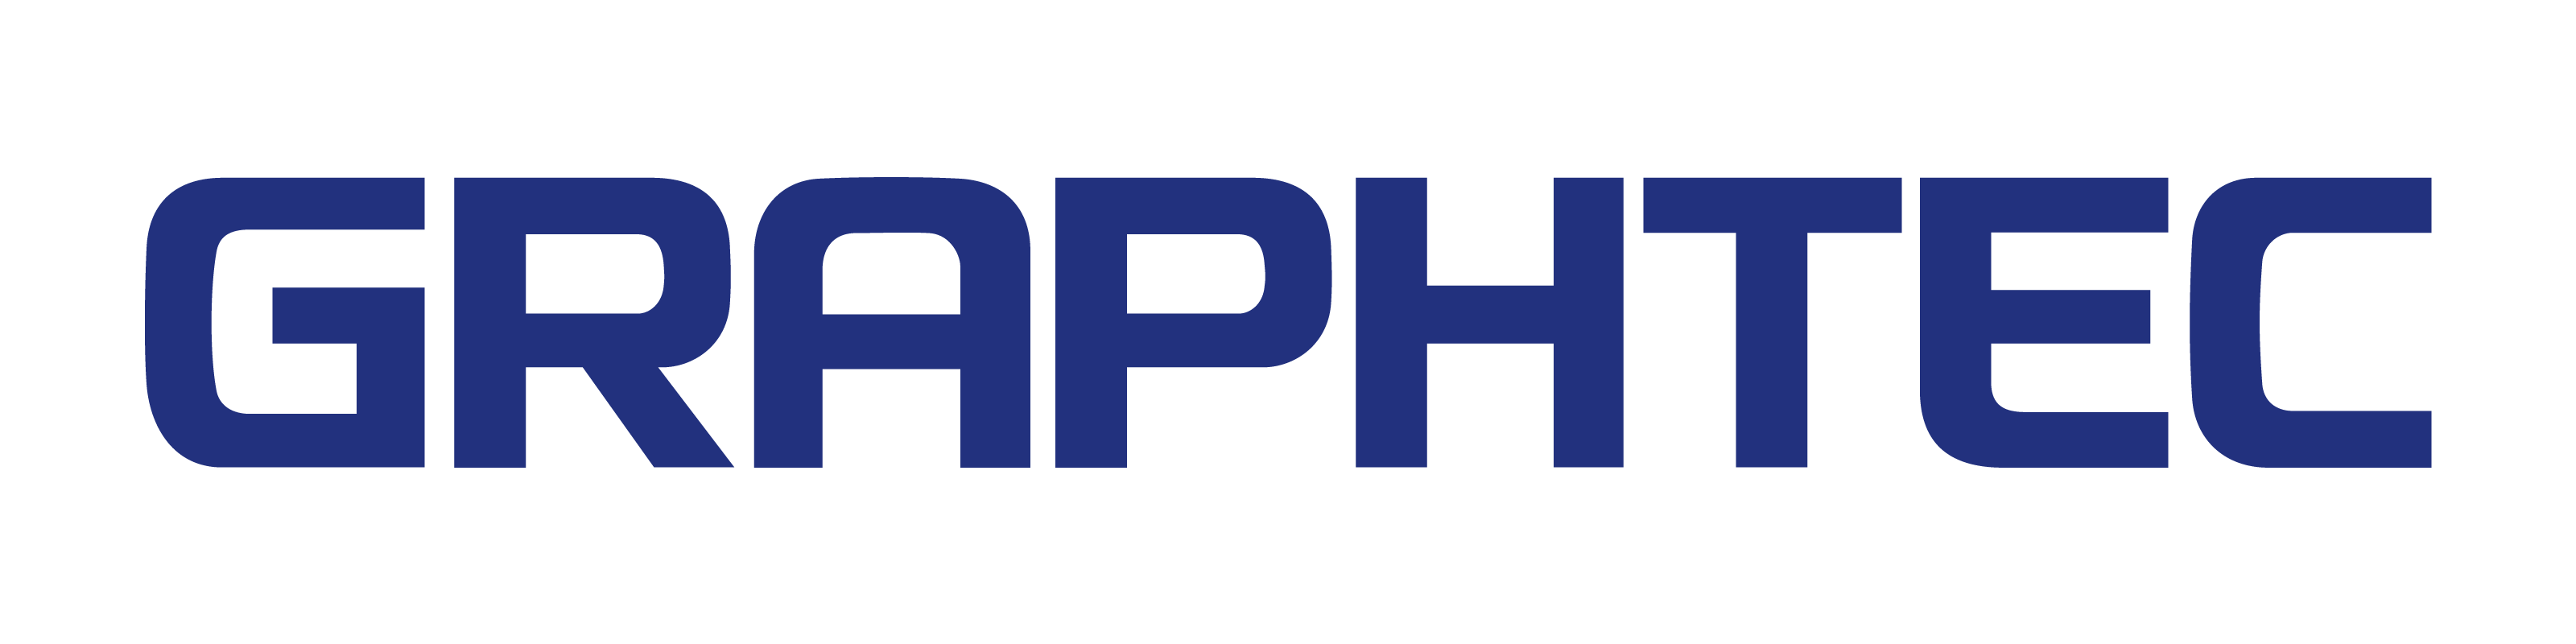 Graphtec Logo Blue